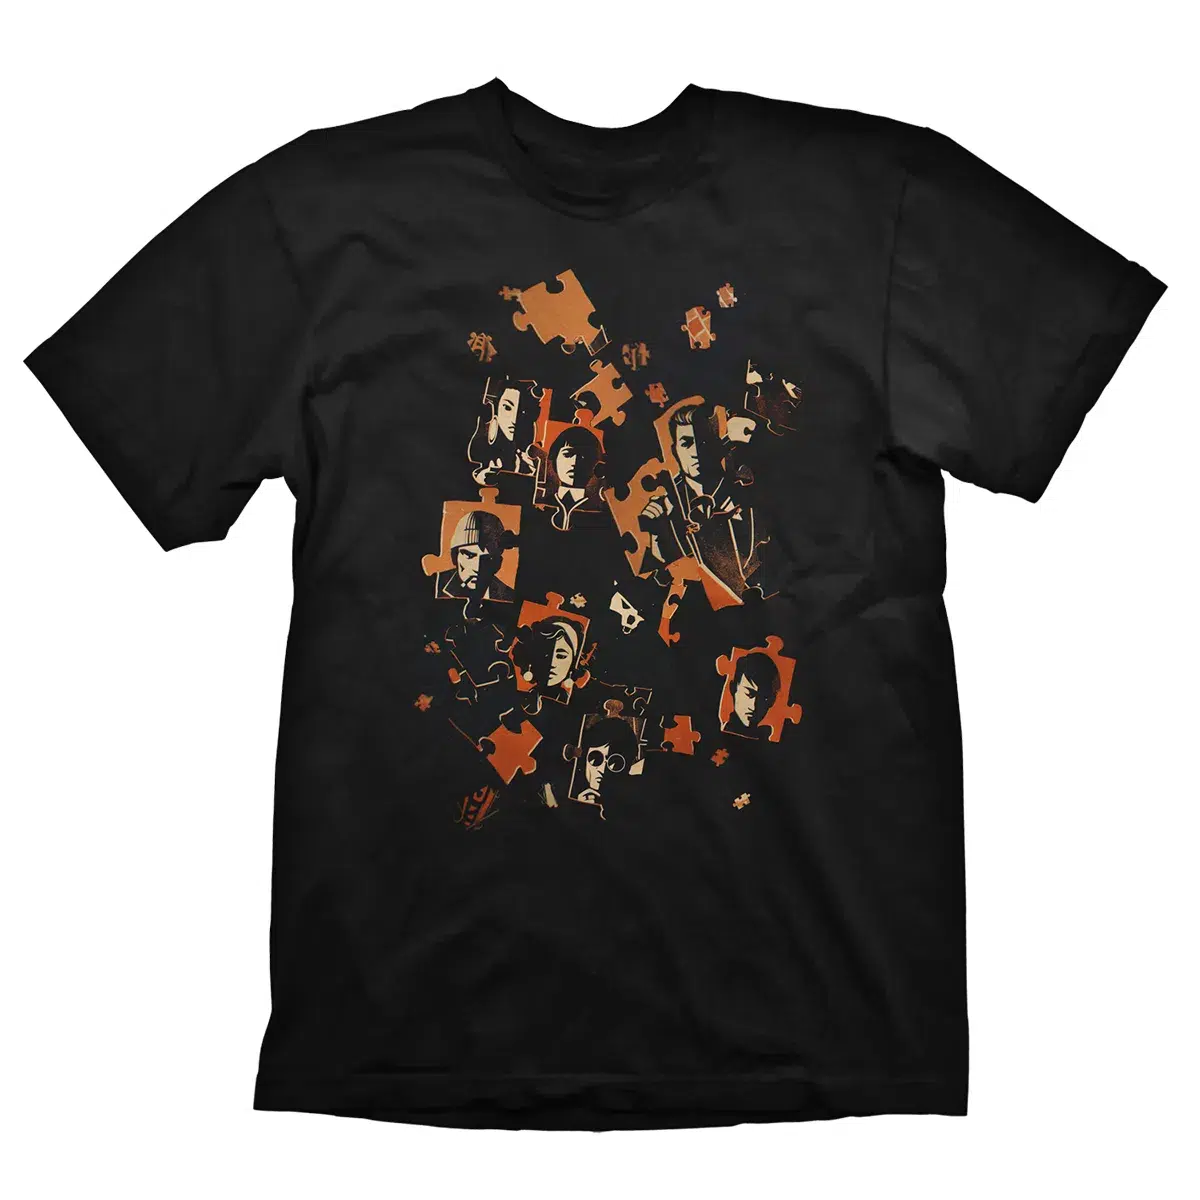 Deathloop T-Shirt "Puzzle" black